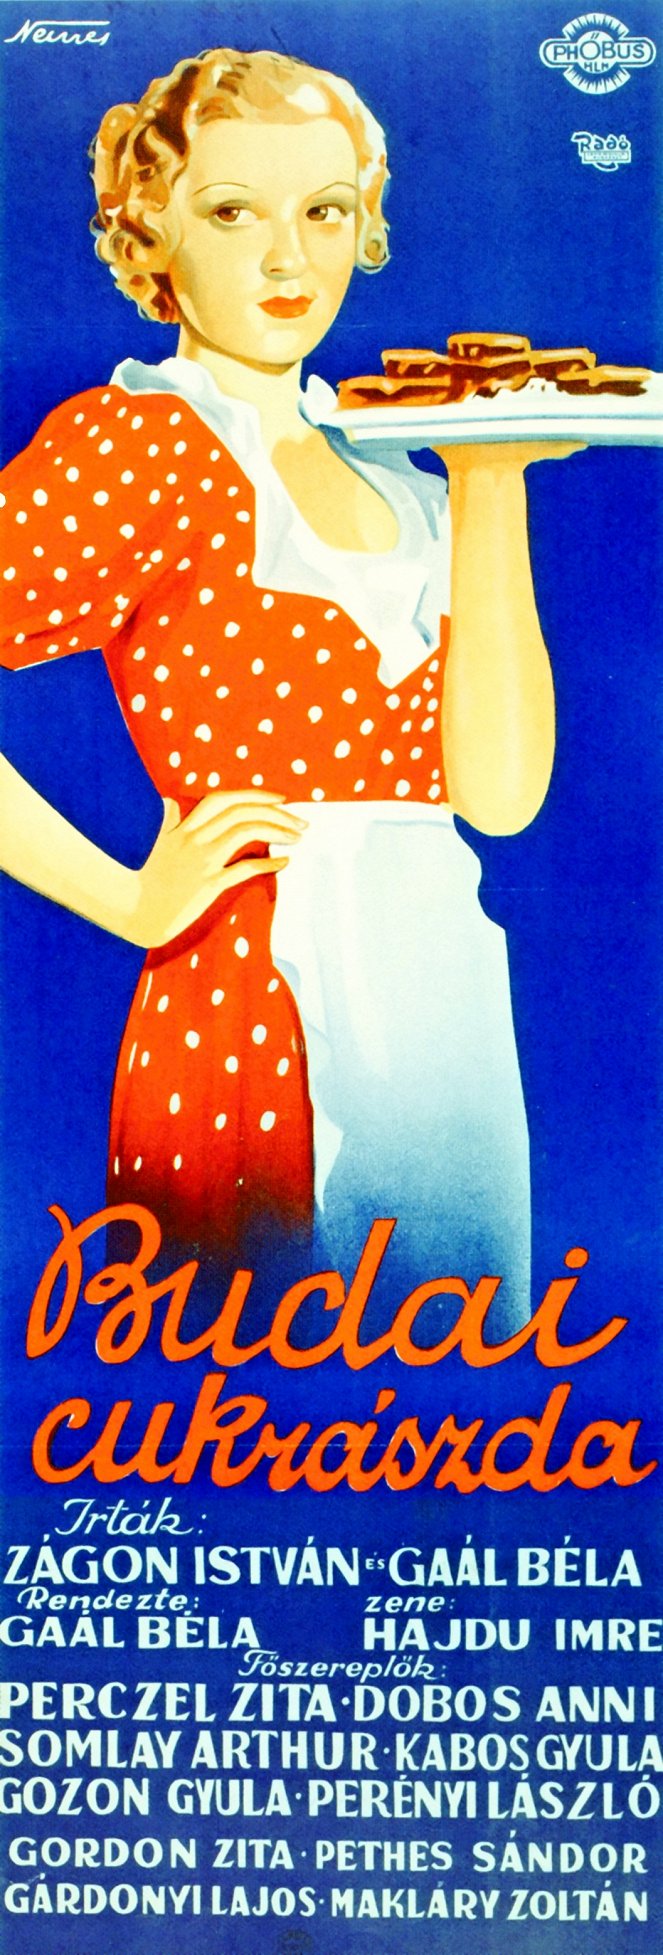 Budai cukrászda - Posters